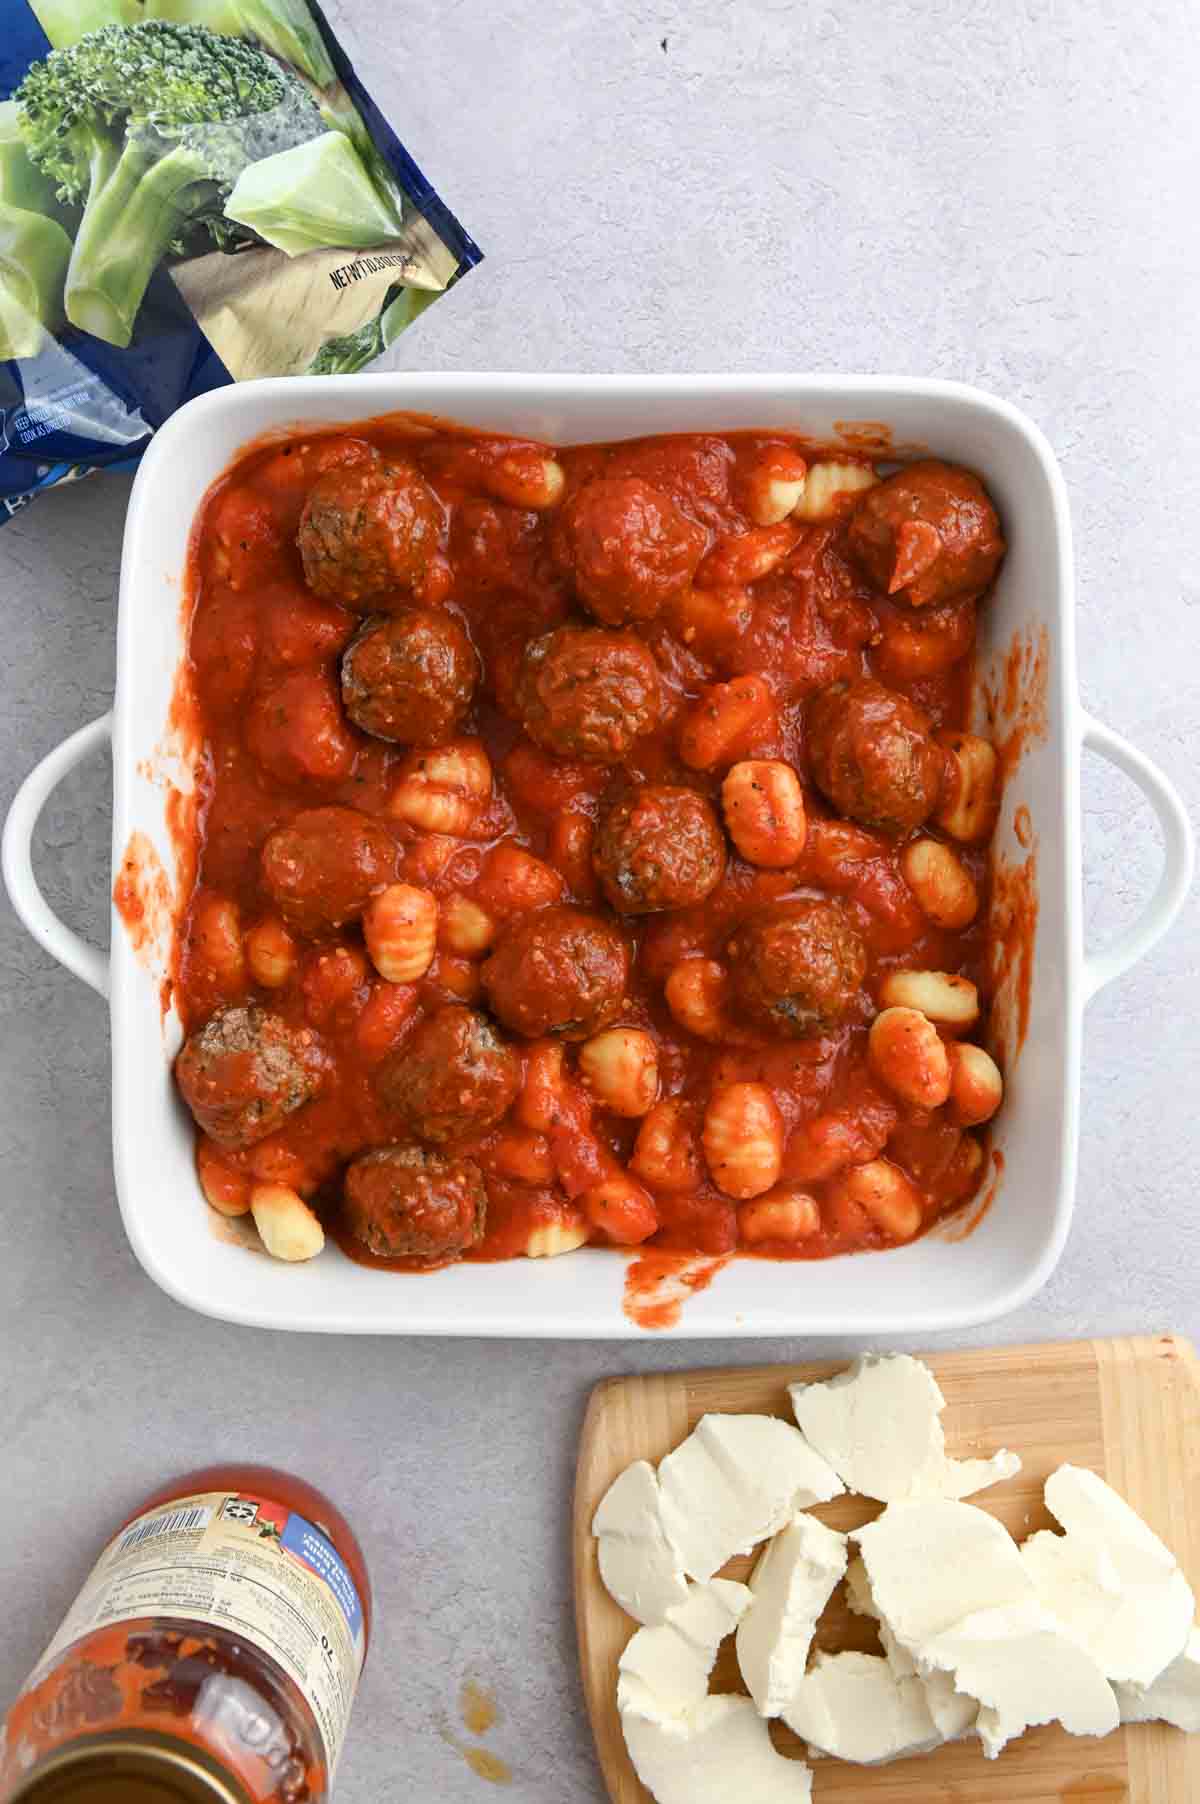 Meatballs, pasta sauce, and gnocchi in a white square baking dish.